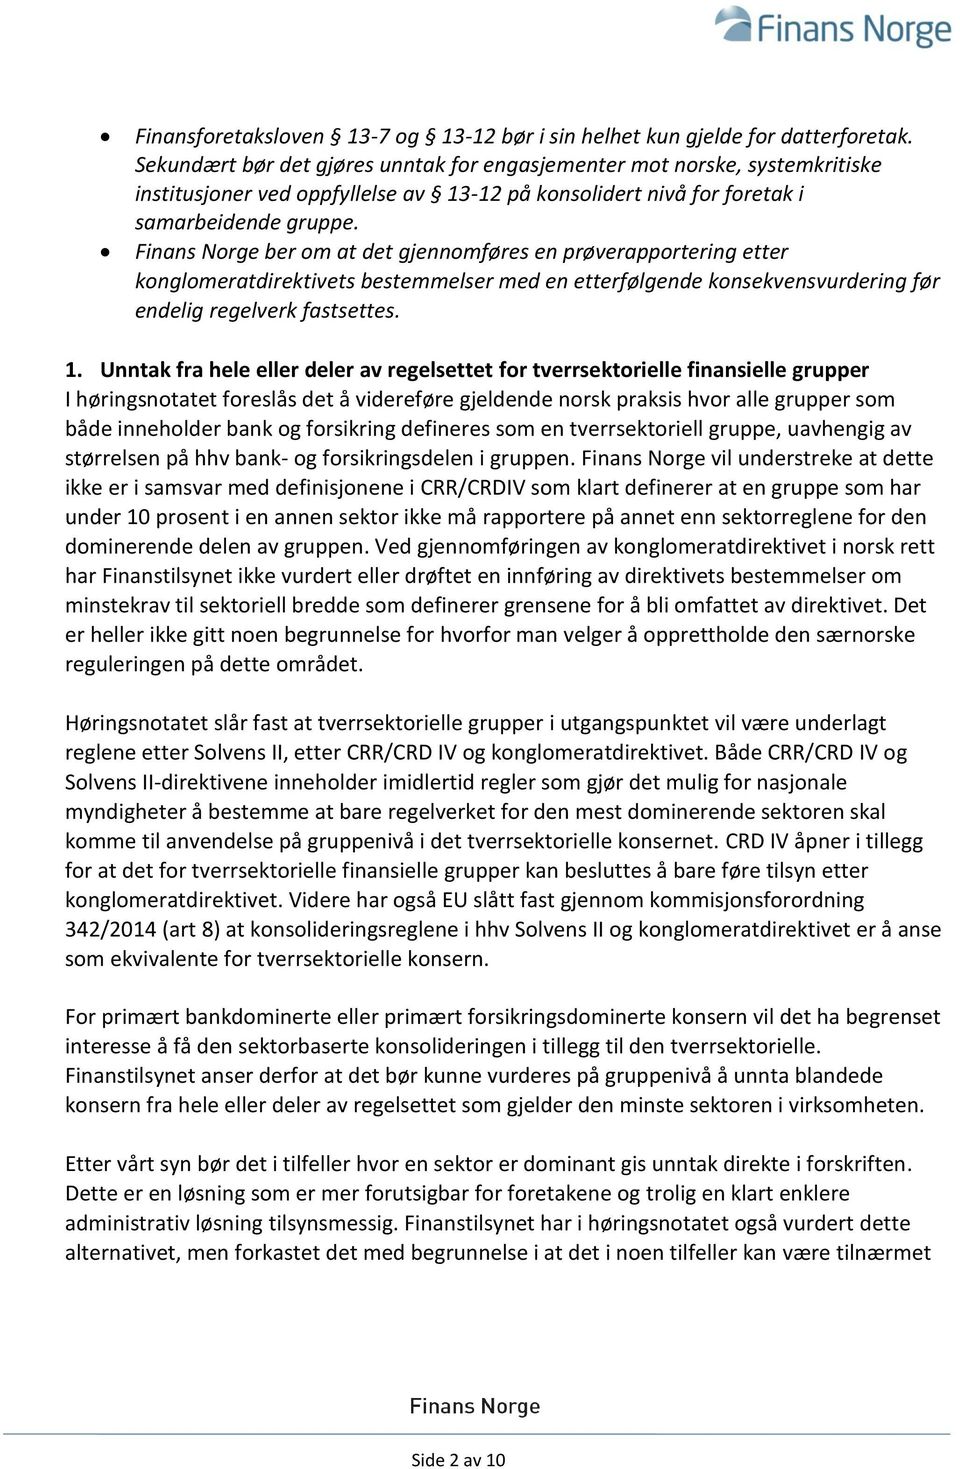 Finans Norge ber om at det gjennomføres en prøverapportering etter konglomeratdirektivets bestemmelser med en etterfølgende konsekvensvurdering før endelig regelverk fastsettes. 1.